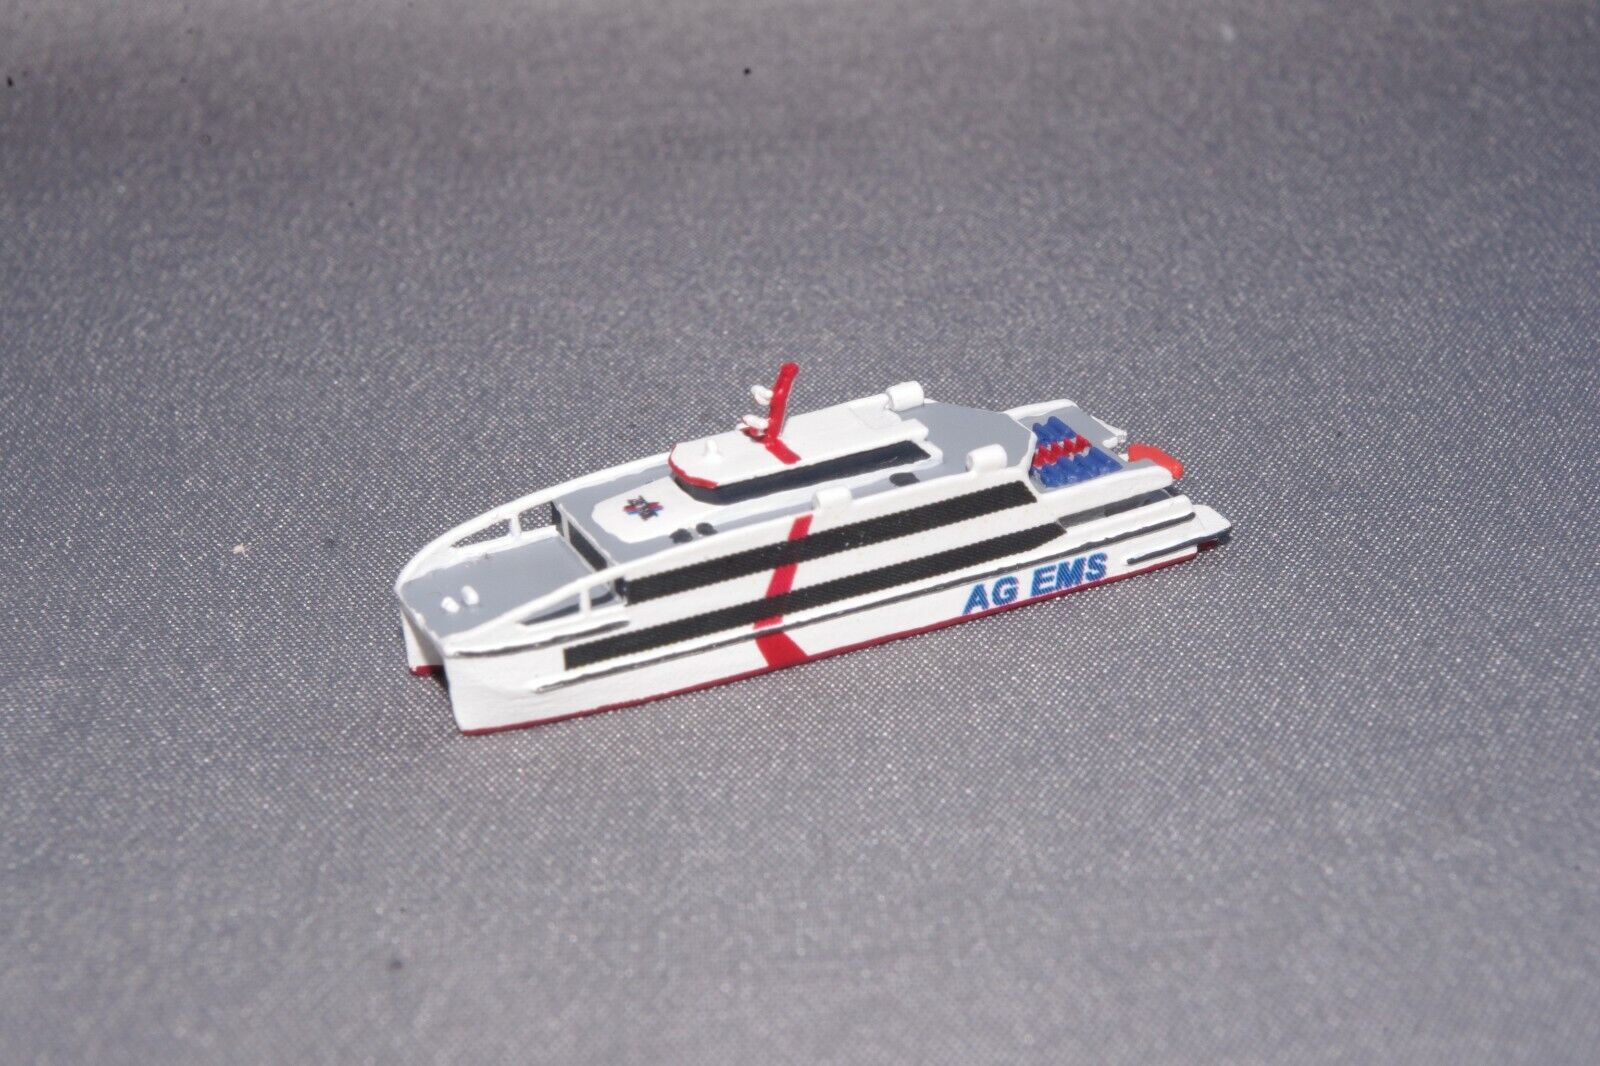 RHENANIA DE PASSENGER SHIP \'MV NORDLICHT II\' 1/1250 MODEL SHIP